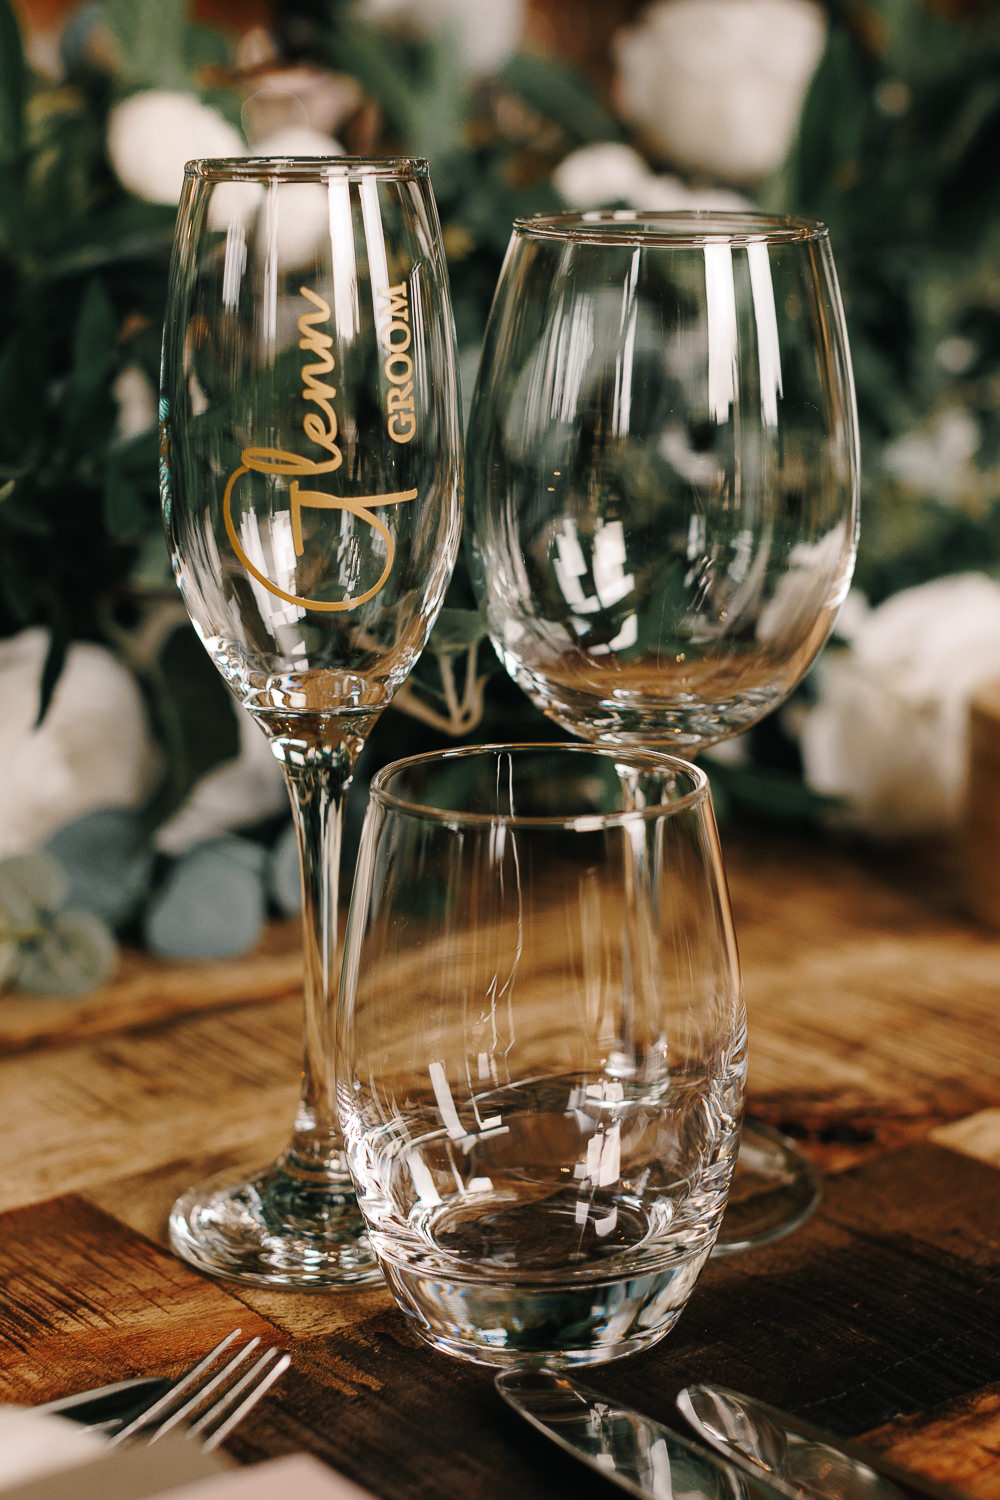 Personalised wine glasses